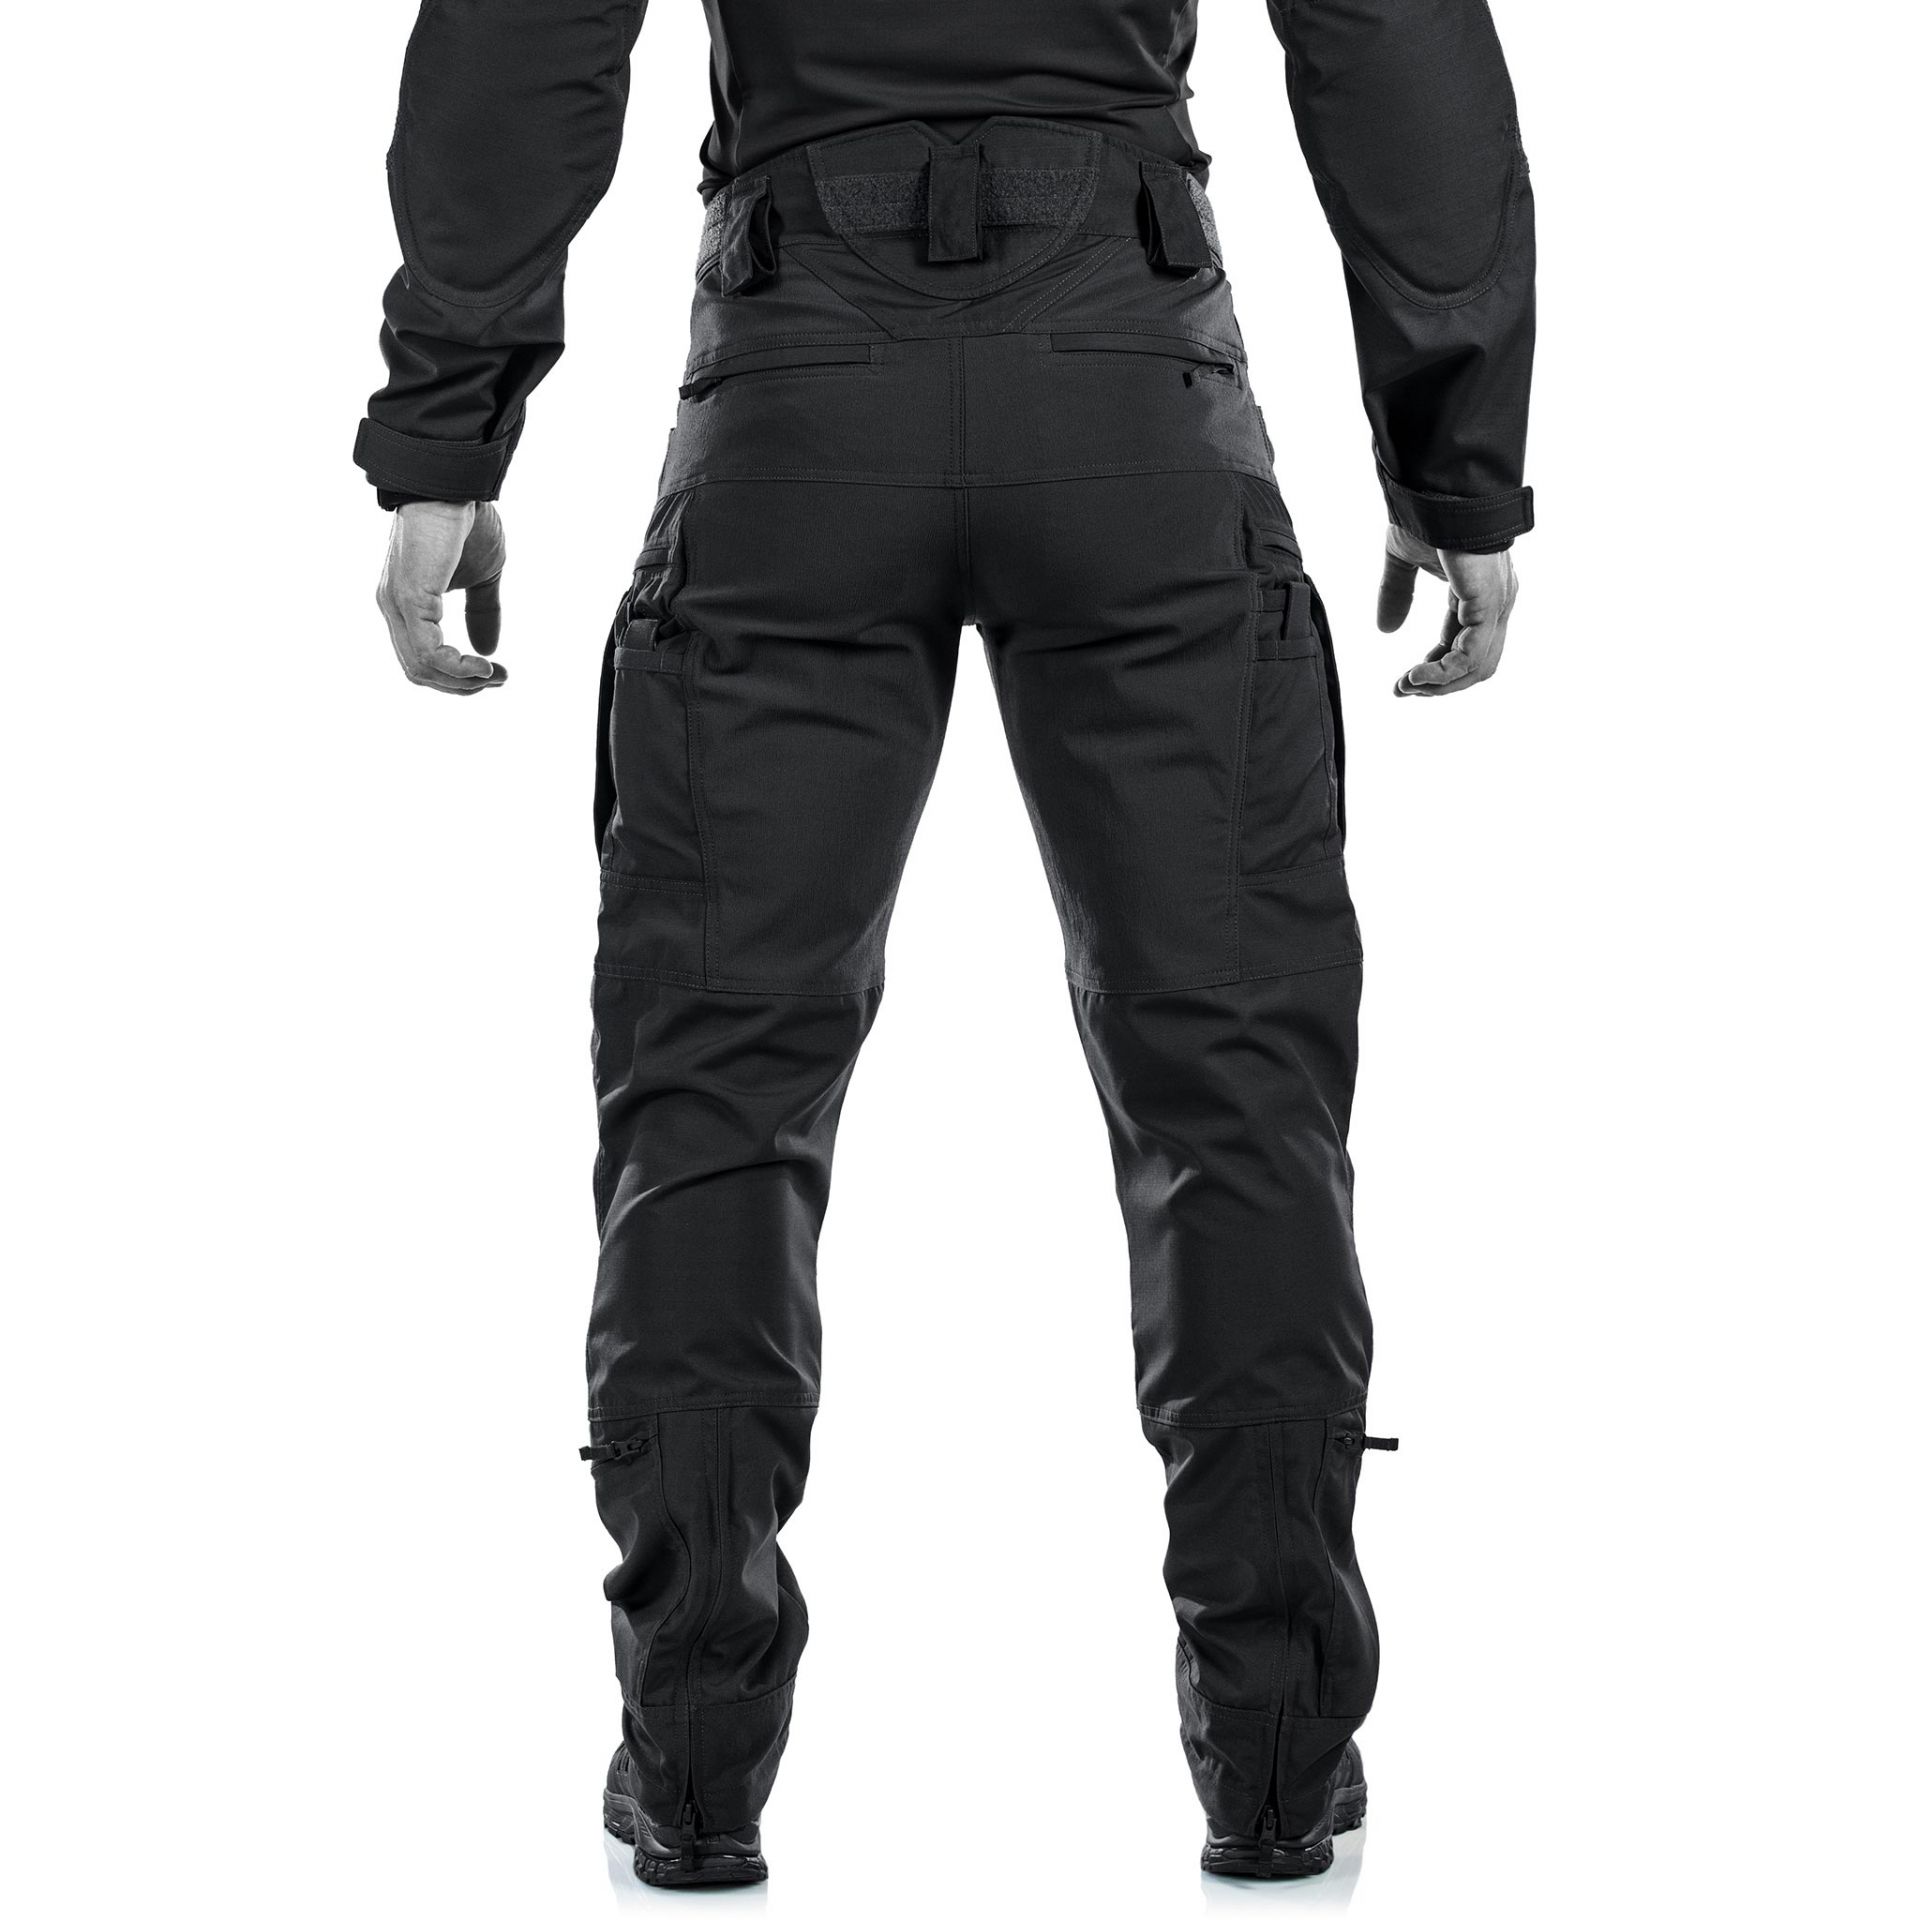 Uneek Mens Work Cargo Combat Black Navy Trousers Pants Short Reg Tall Low Price 